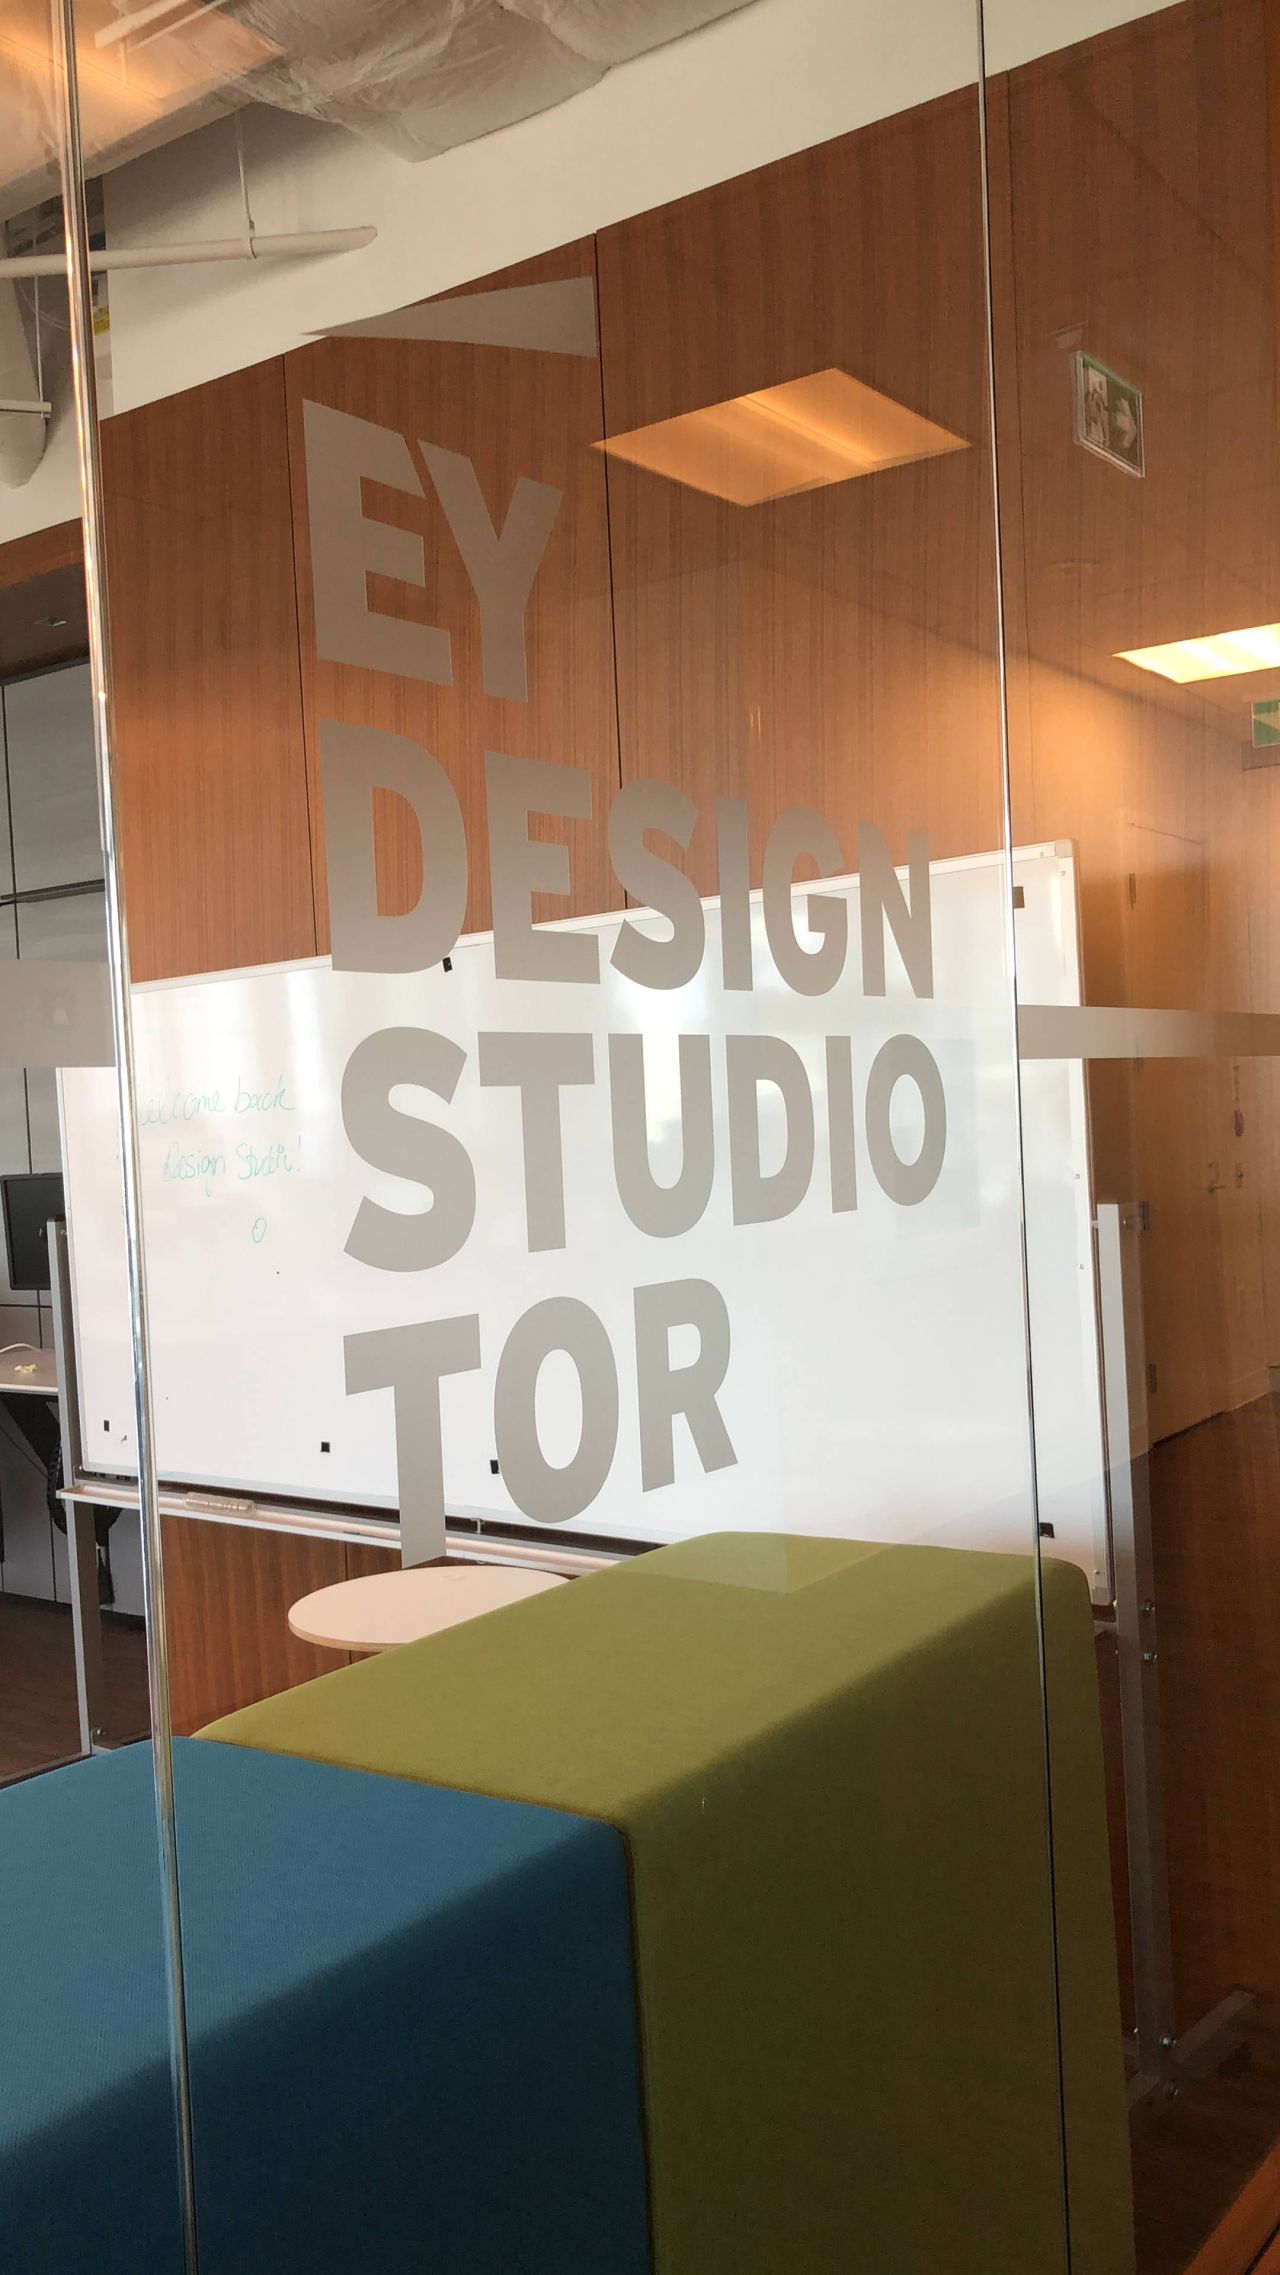 EY Design Studio Toronto